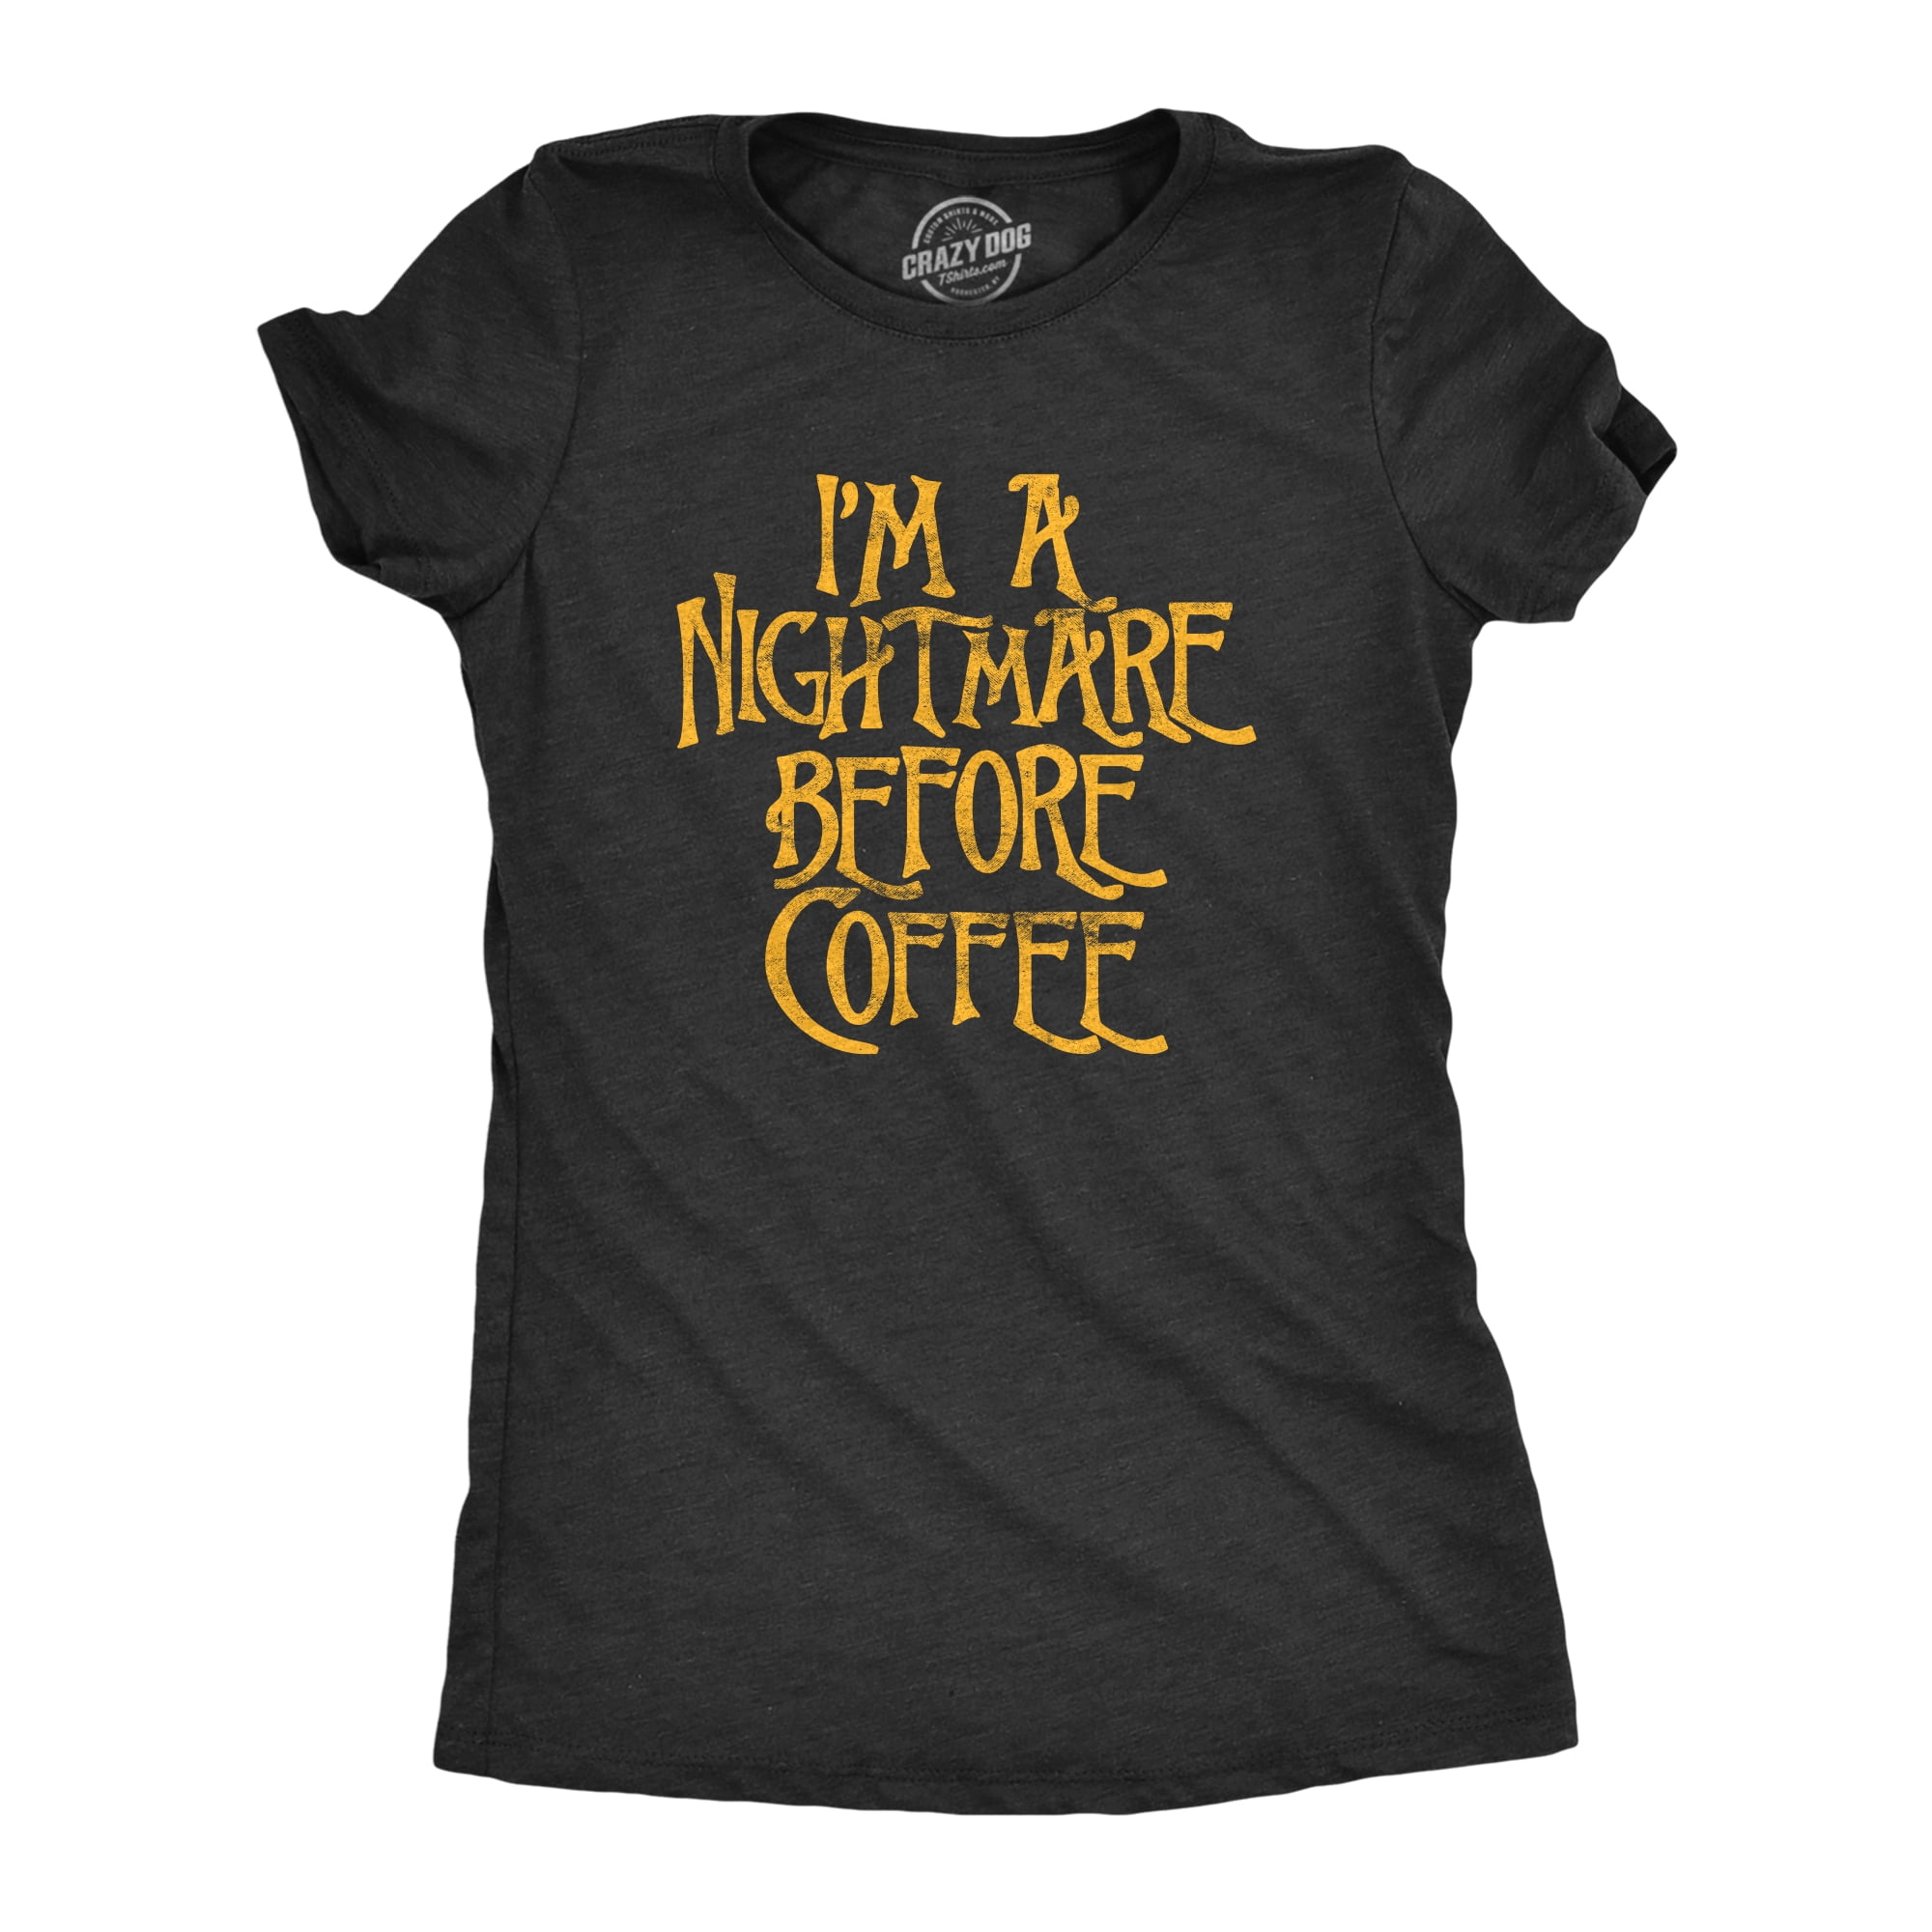 Fall Clothes Halloween T-shirt Halloween Shirts Funny Halloween Shirt I'm a Nightmare Before Coffee Shirt Womens Halloween Shirts